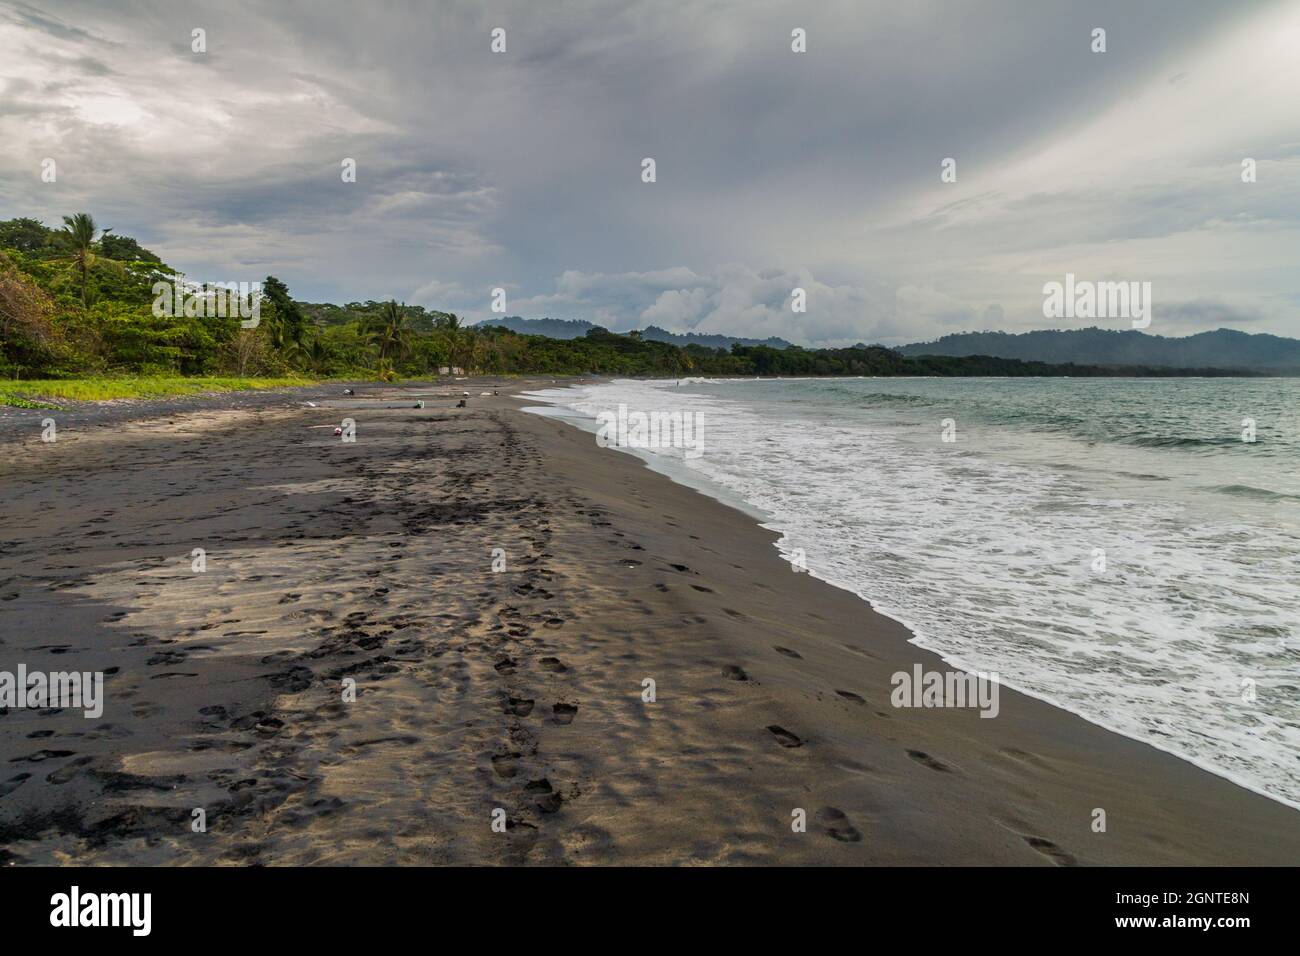 Beach in Puerto Viejo de Talamanca village, Costa Rica Stock Photo